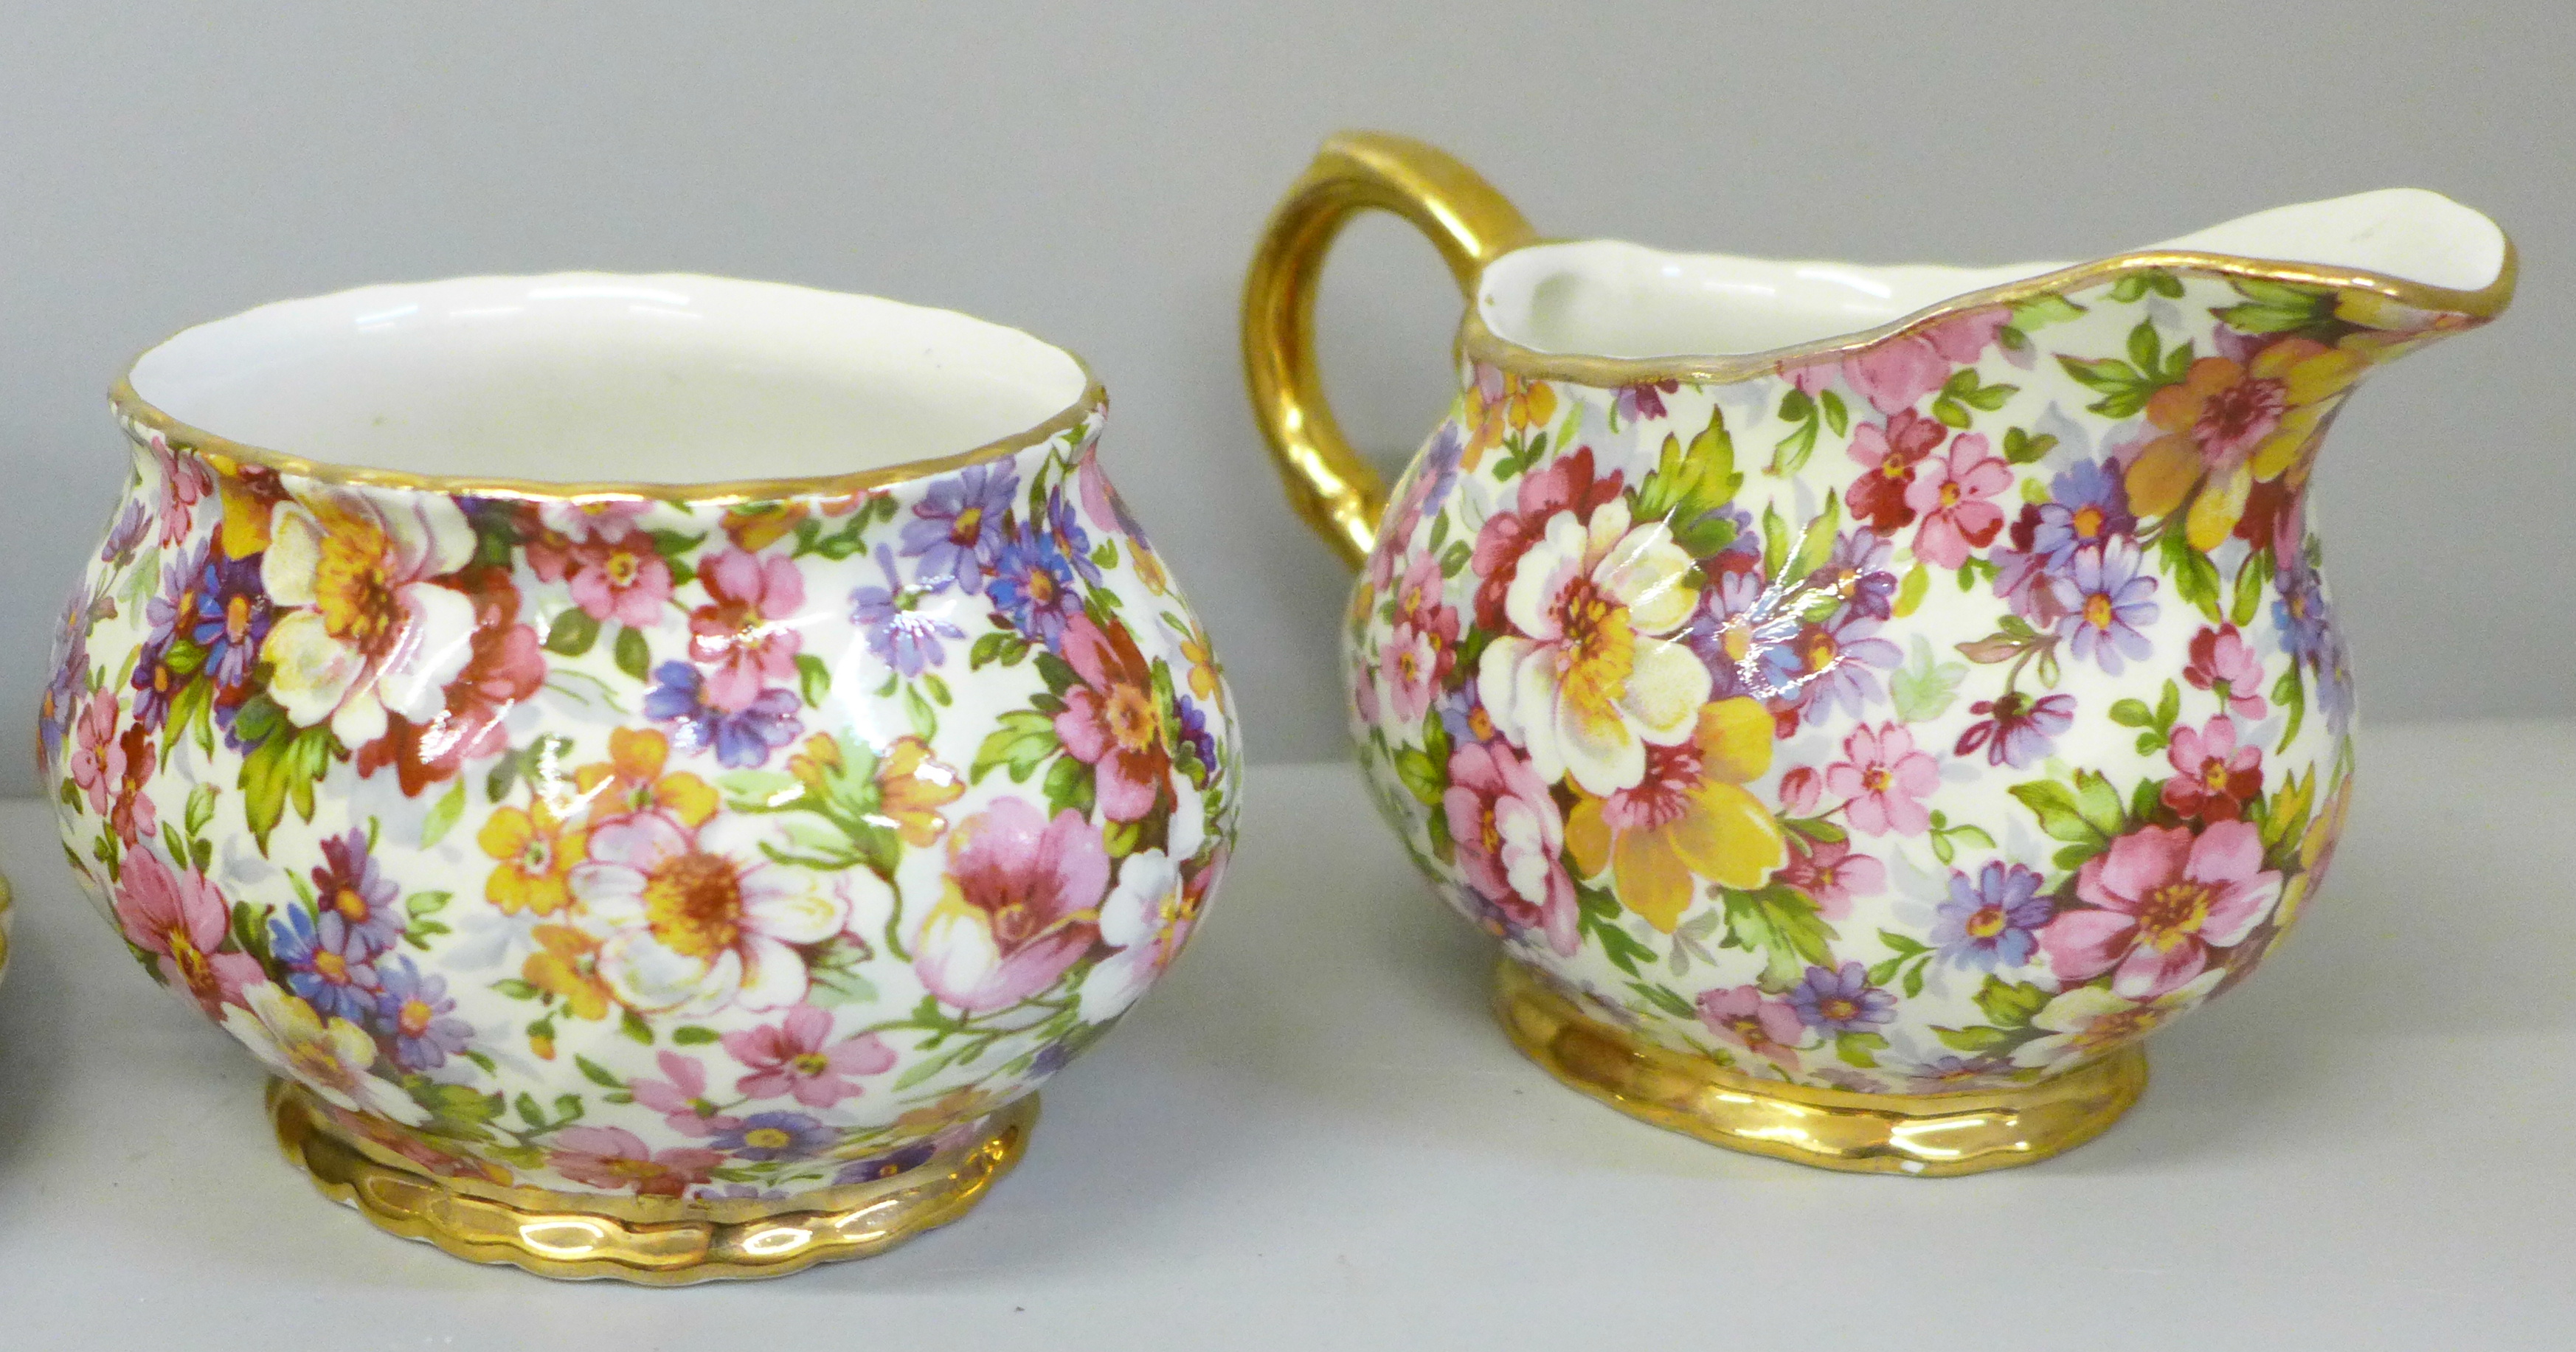 A James Kent chintz teaset for one, a Du Barry pattern chintz teapot, cream jug, sugar bowl, side - Image 4 of 5